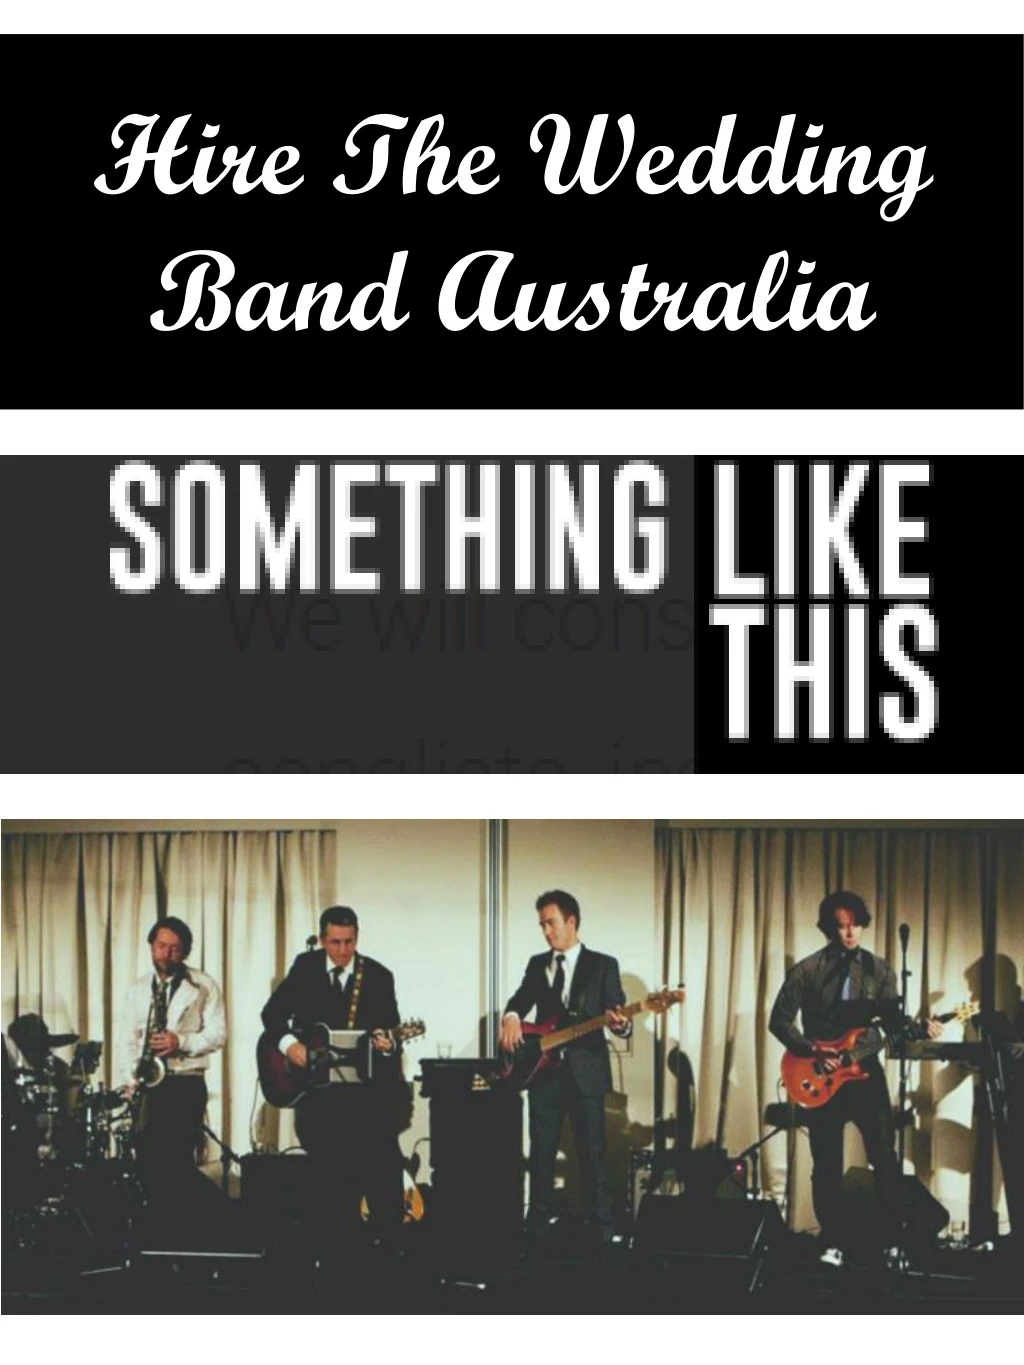 hire the wedding band australia